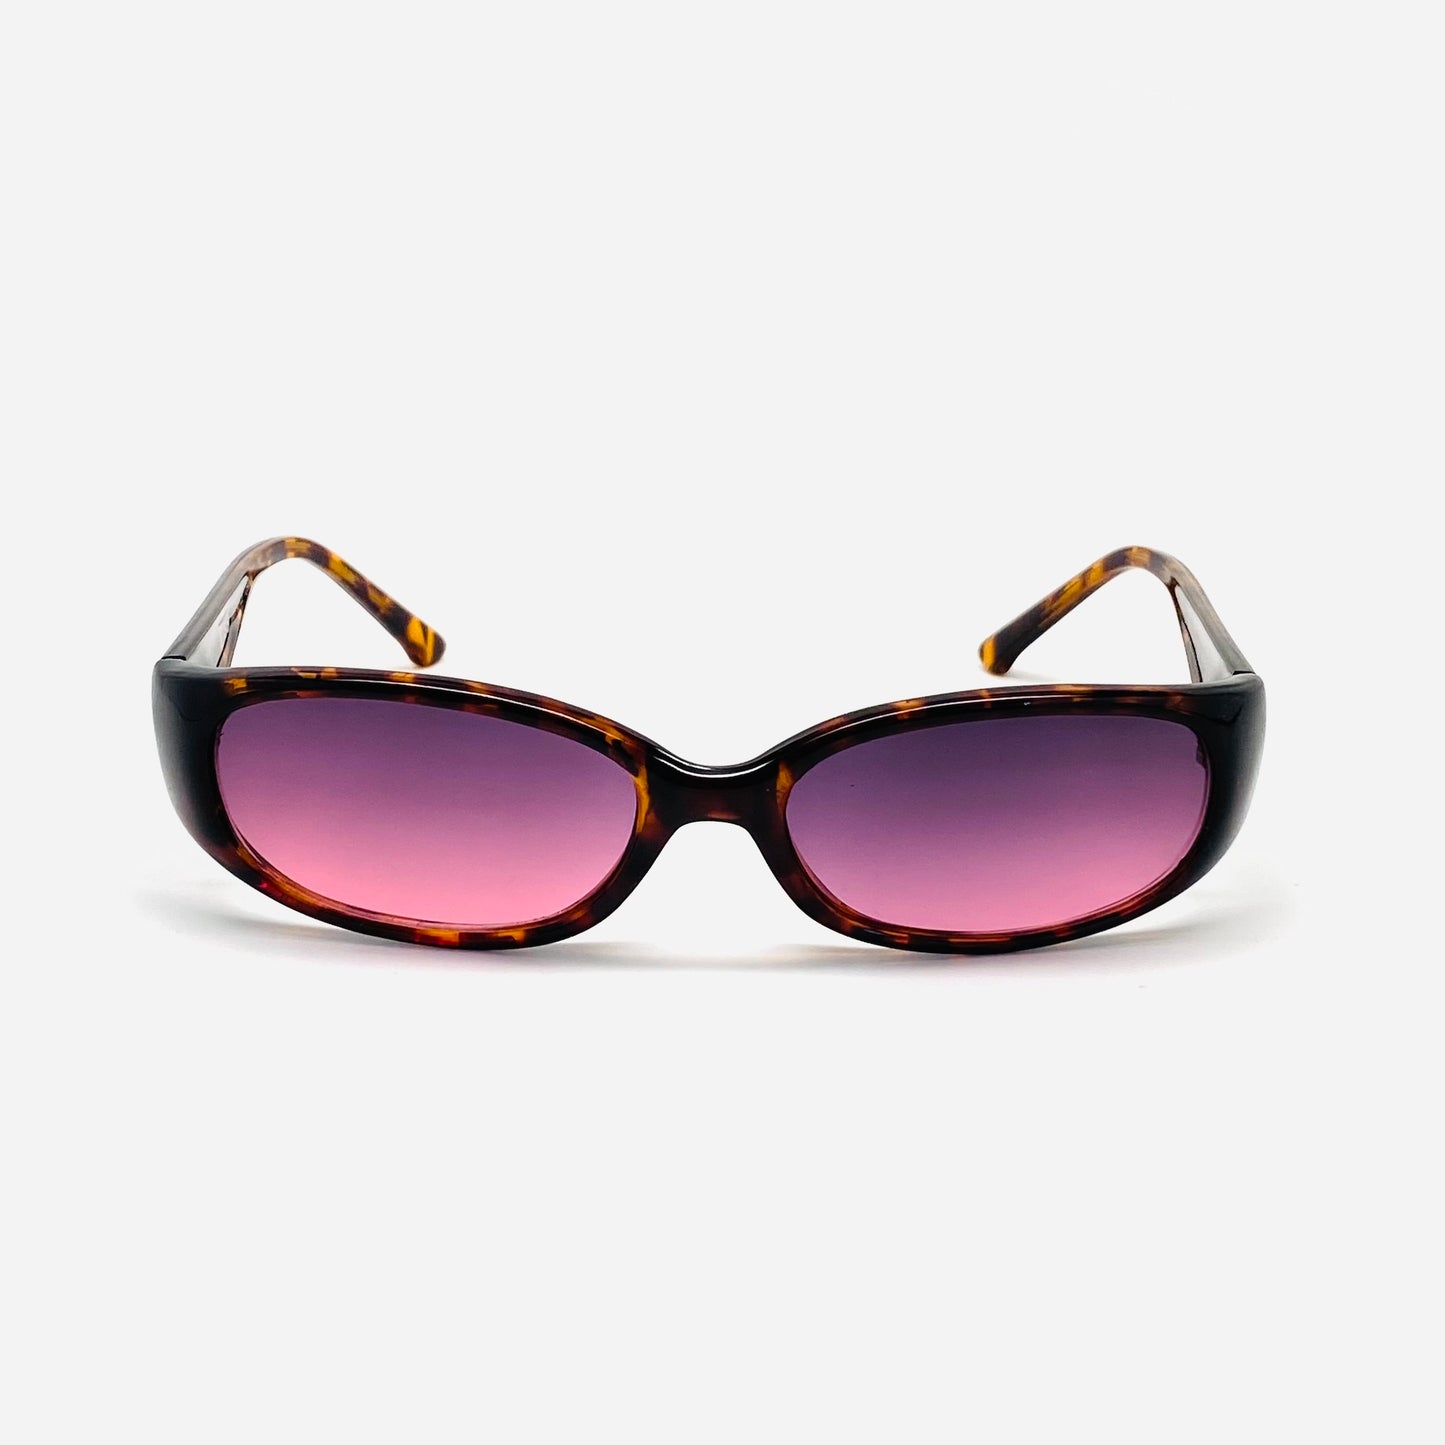 Vintage Small Size Alexine Oval Frame Sunglasses - Tortoise Purple